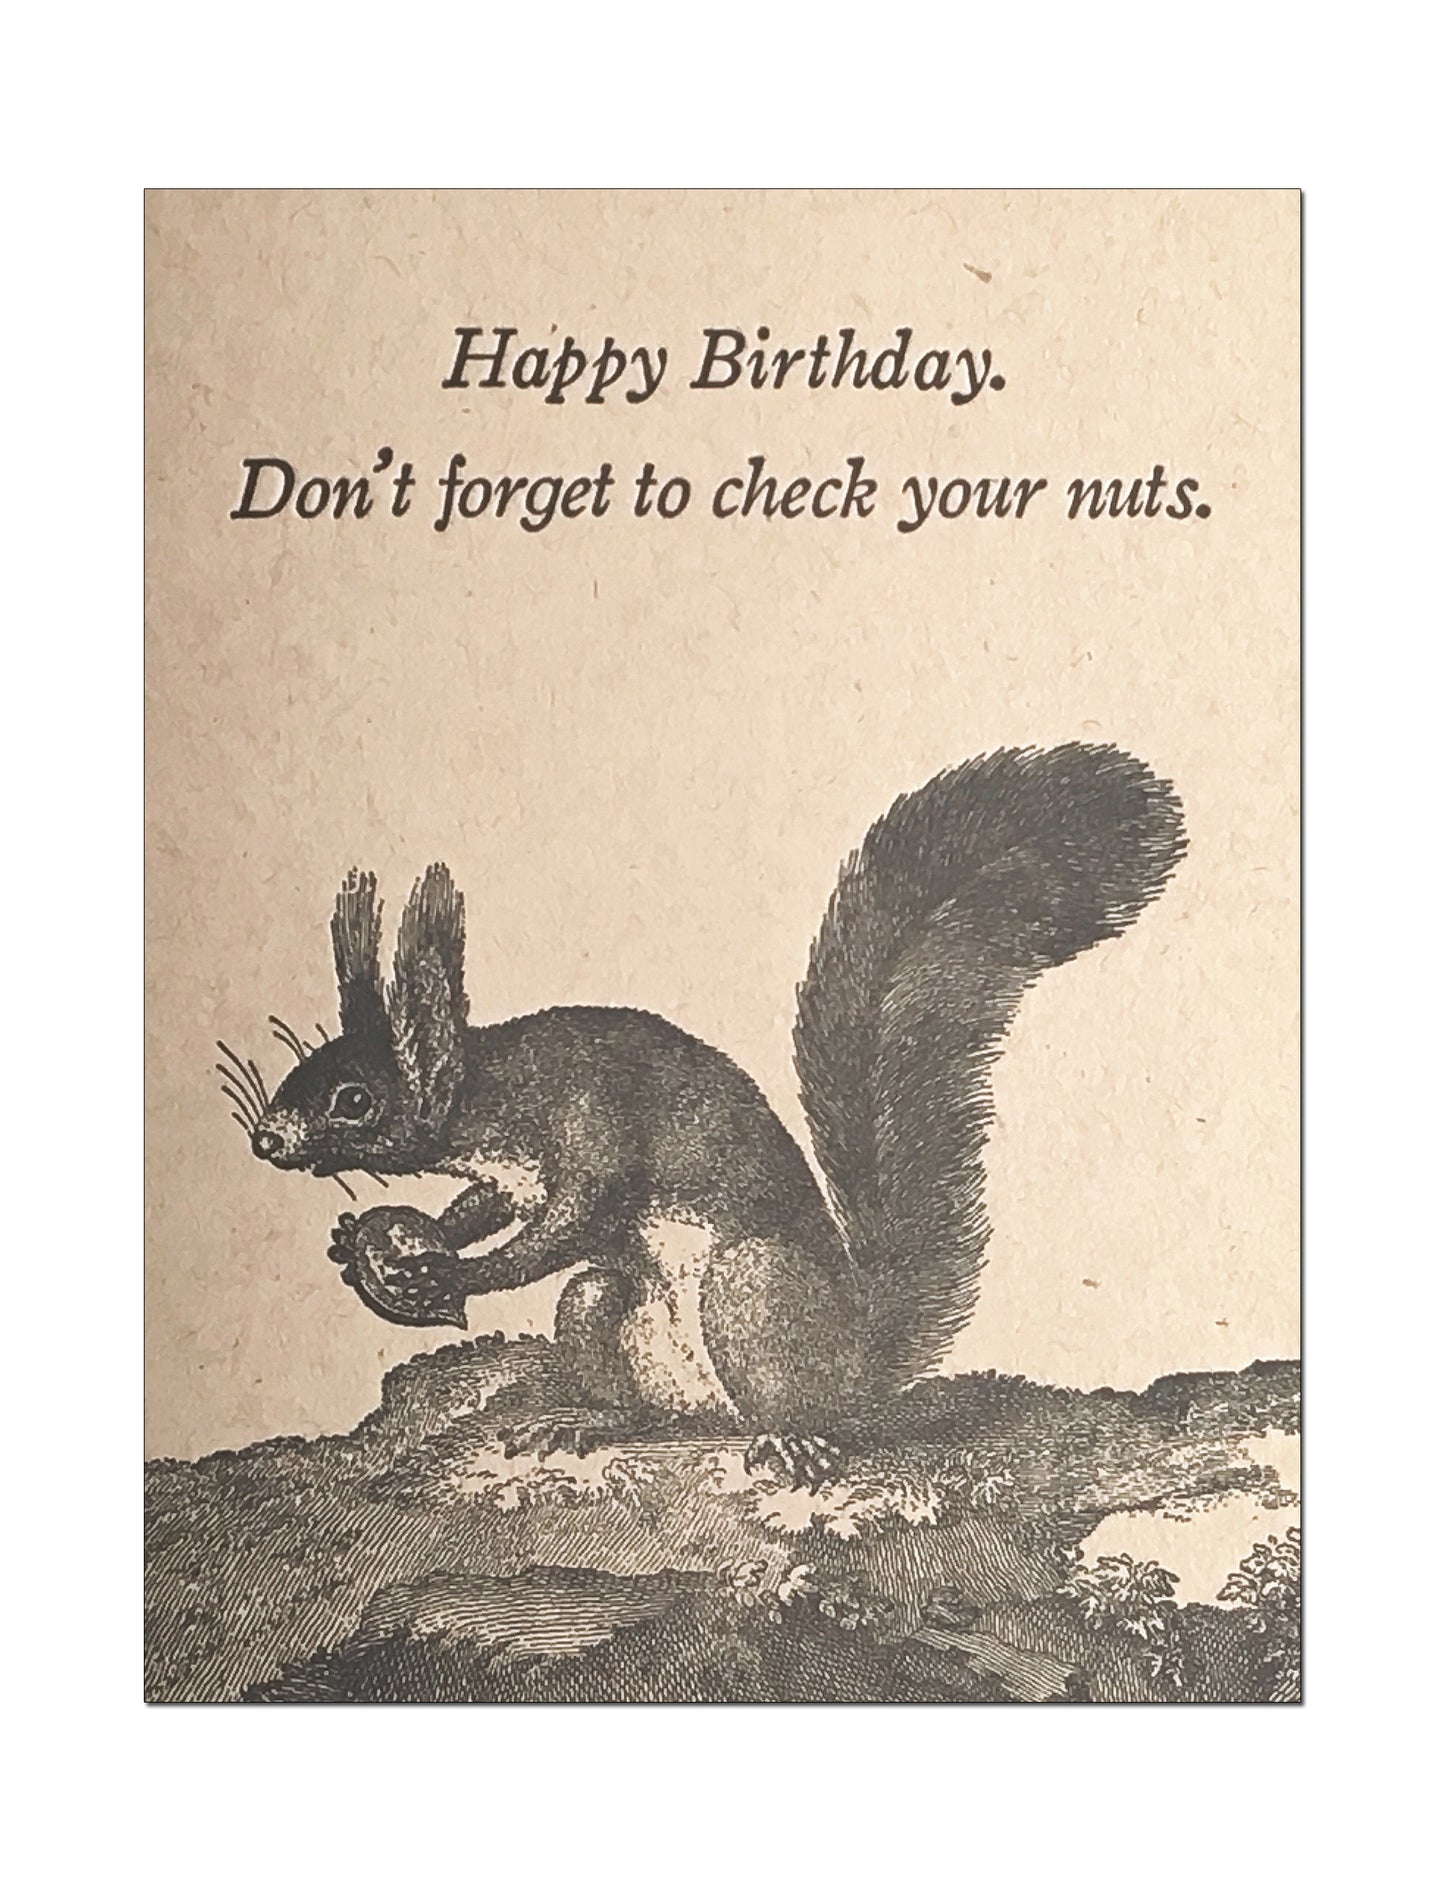 Check Your Nuts. Letterpress Men's Health Birthday.